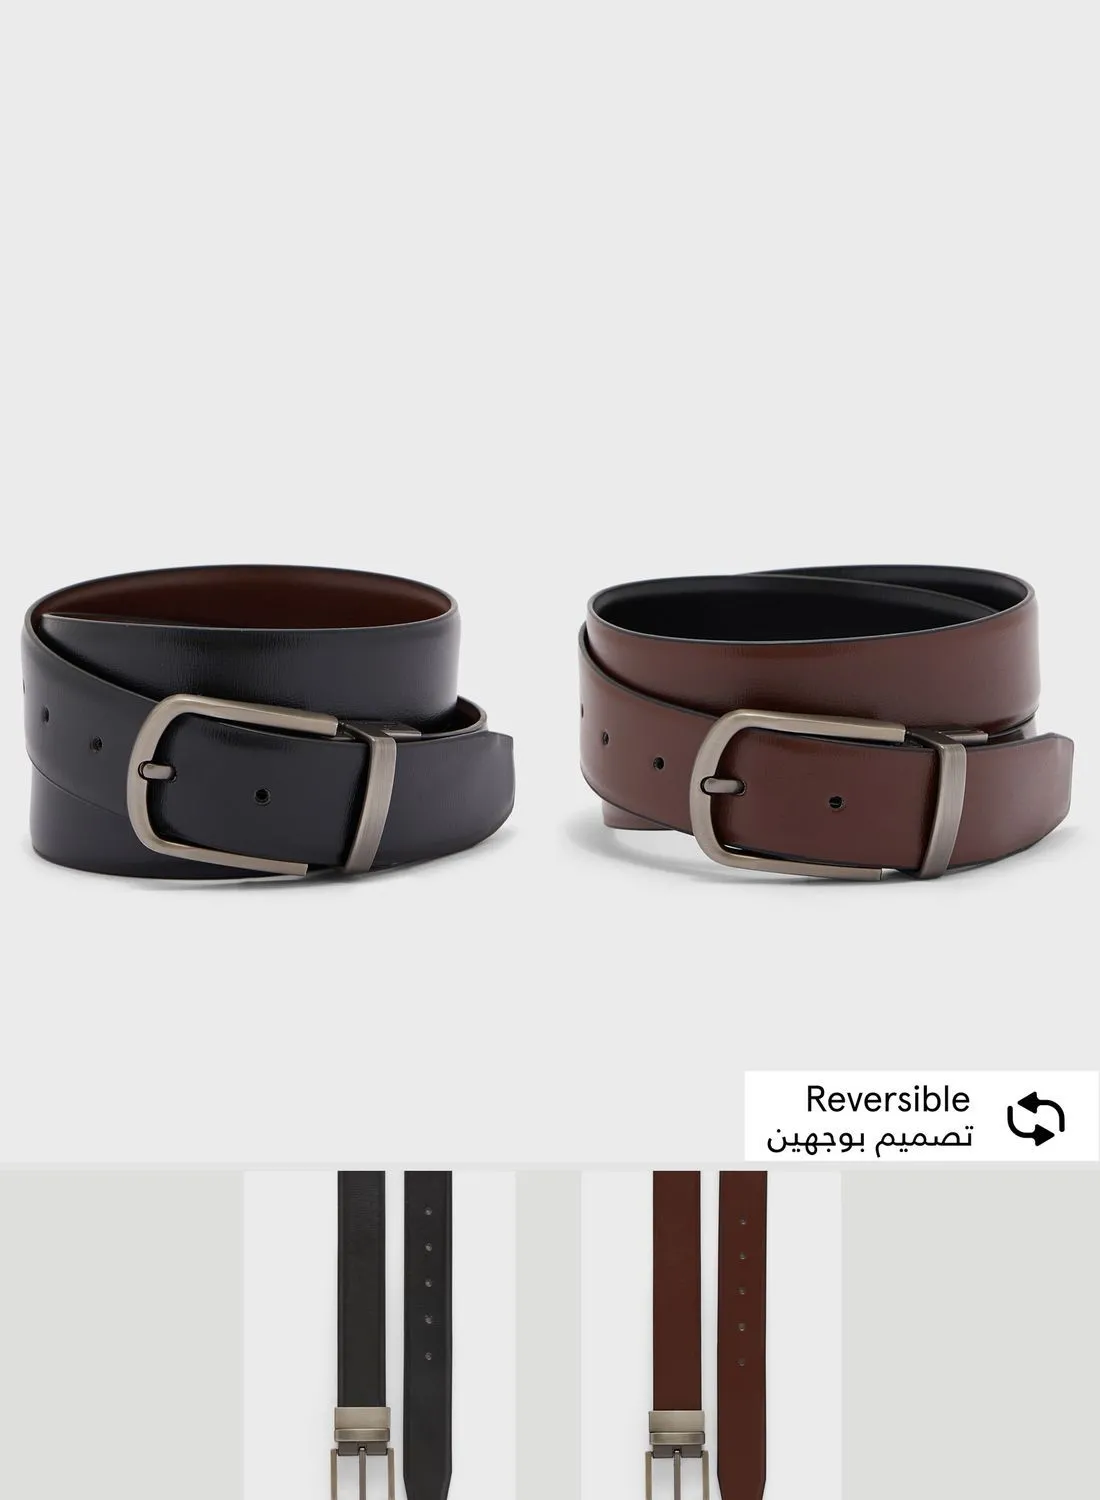 Robert Wood Genuine Leather Formal Belt